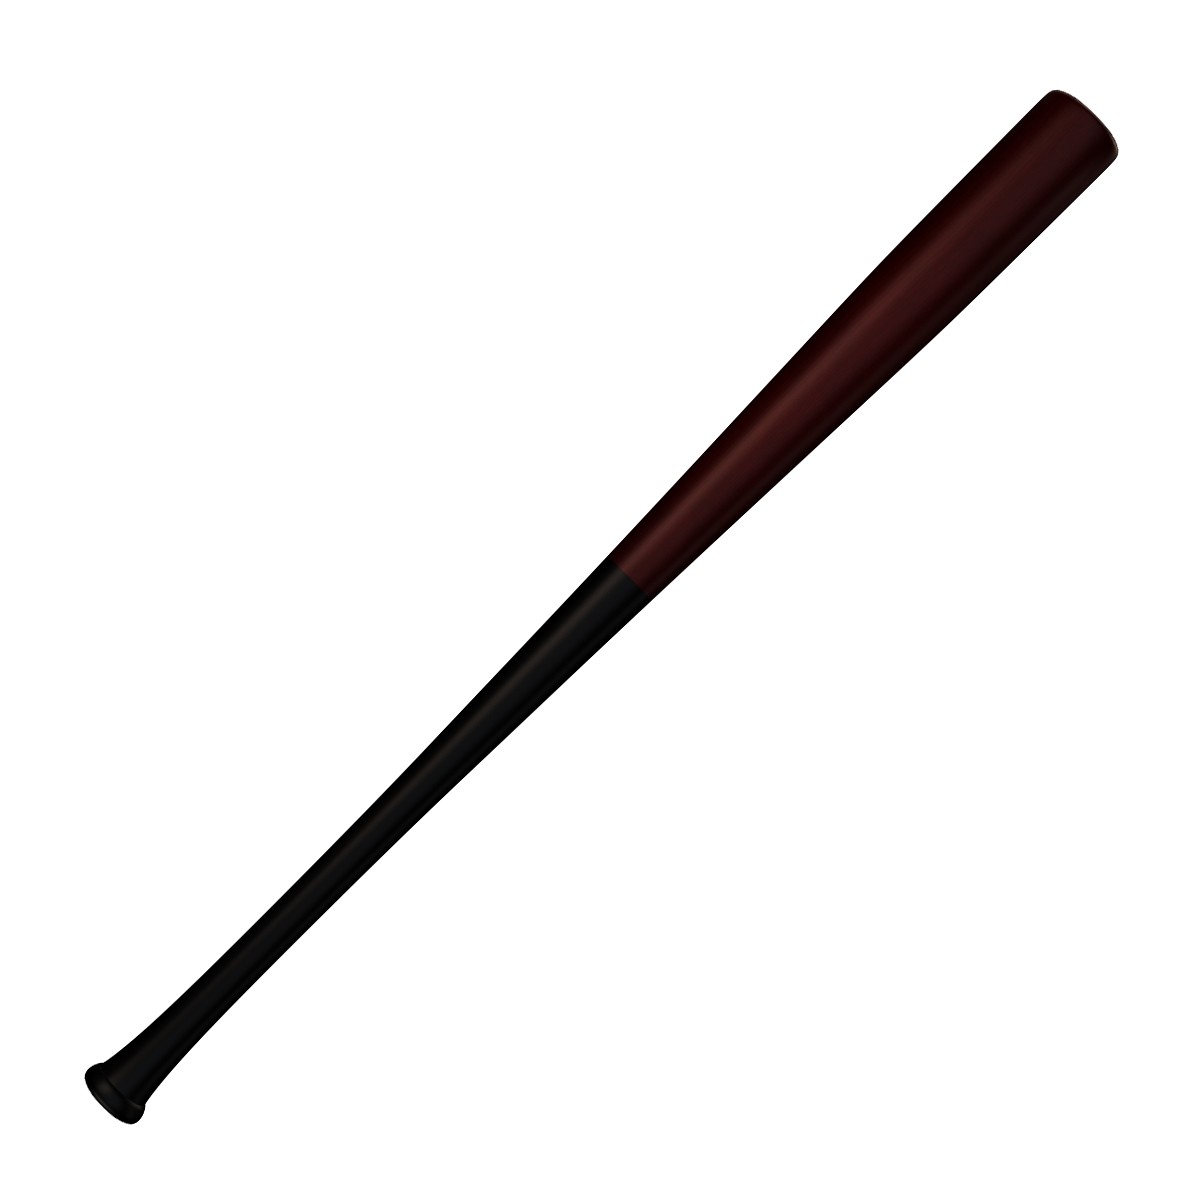 DeMarini D271 Pro Maple Composite Wood Baseball Bat